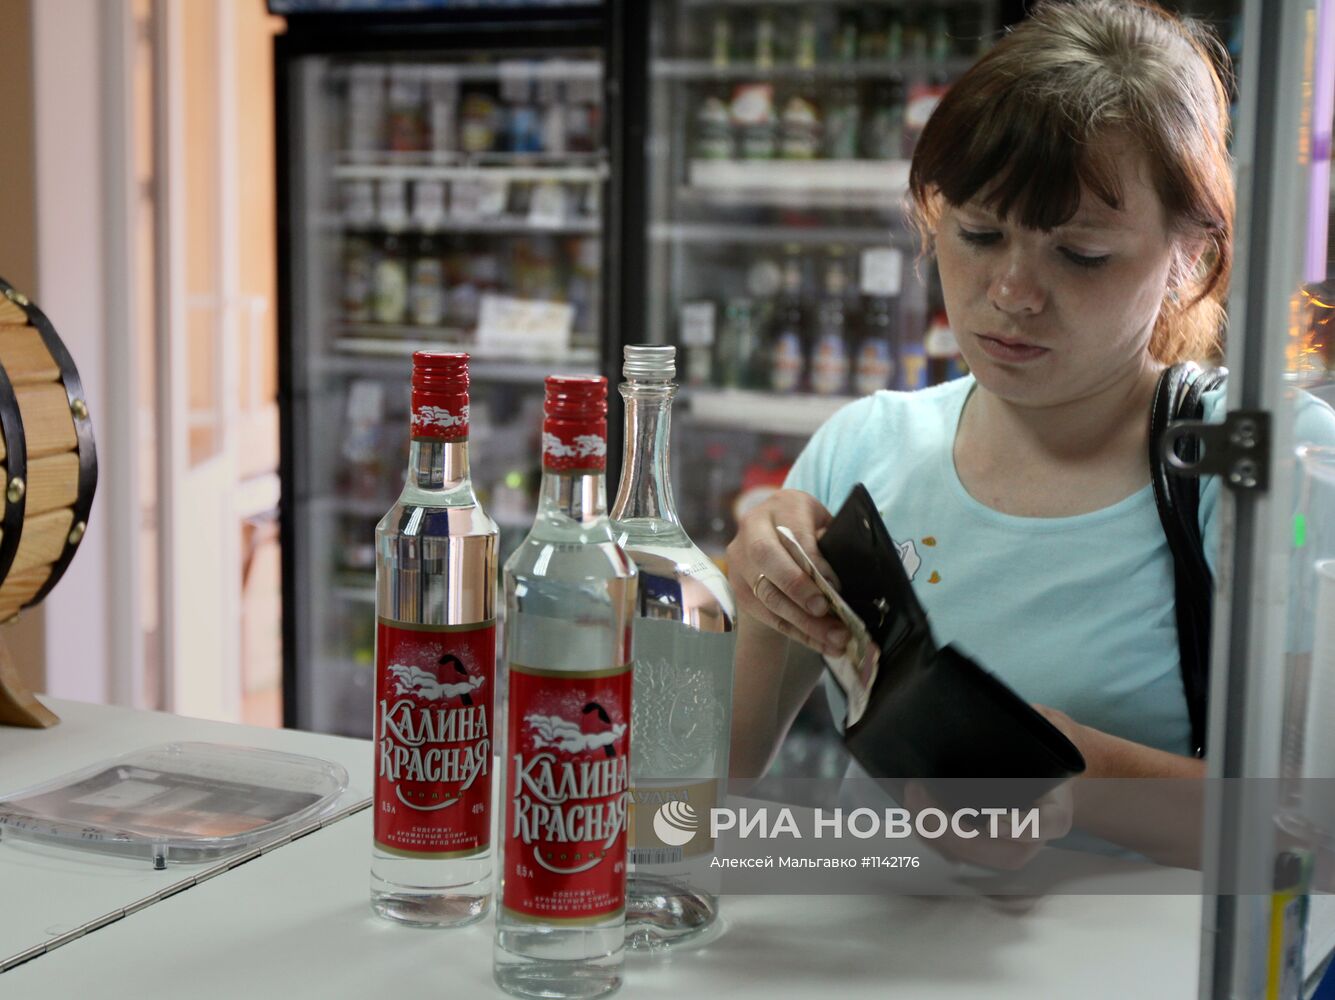 Продажа водки в магазинах Омска